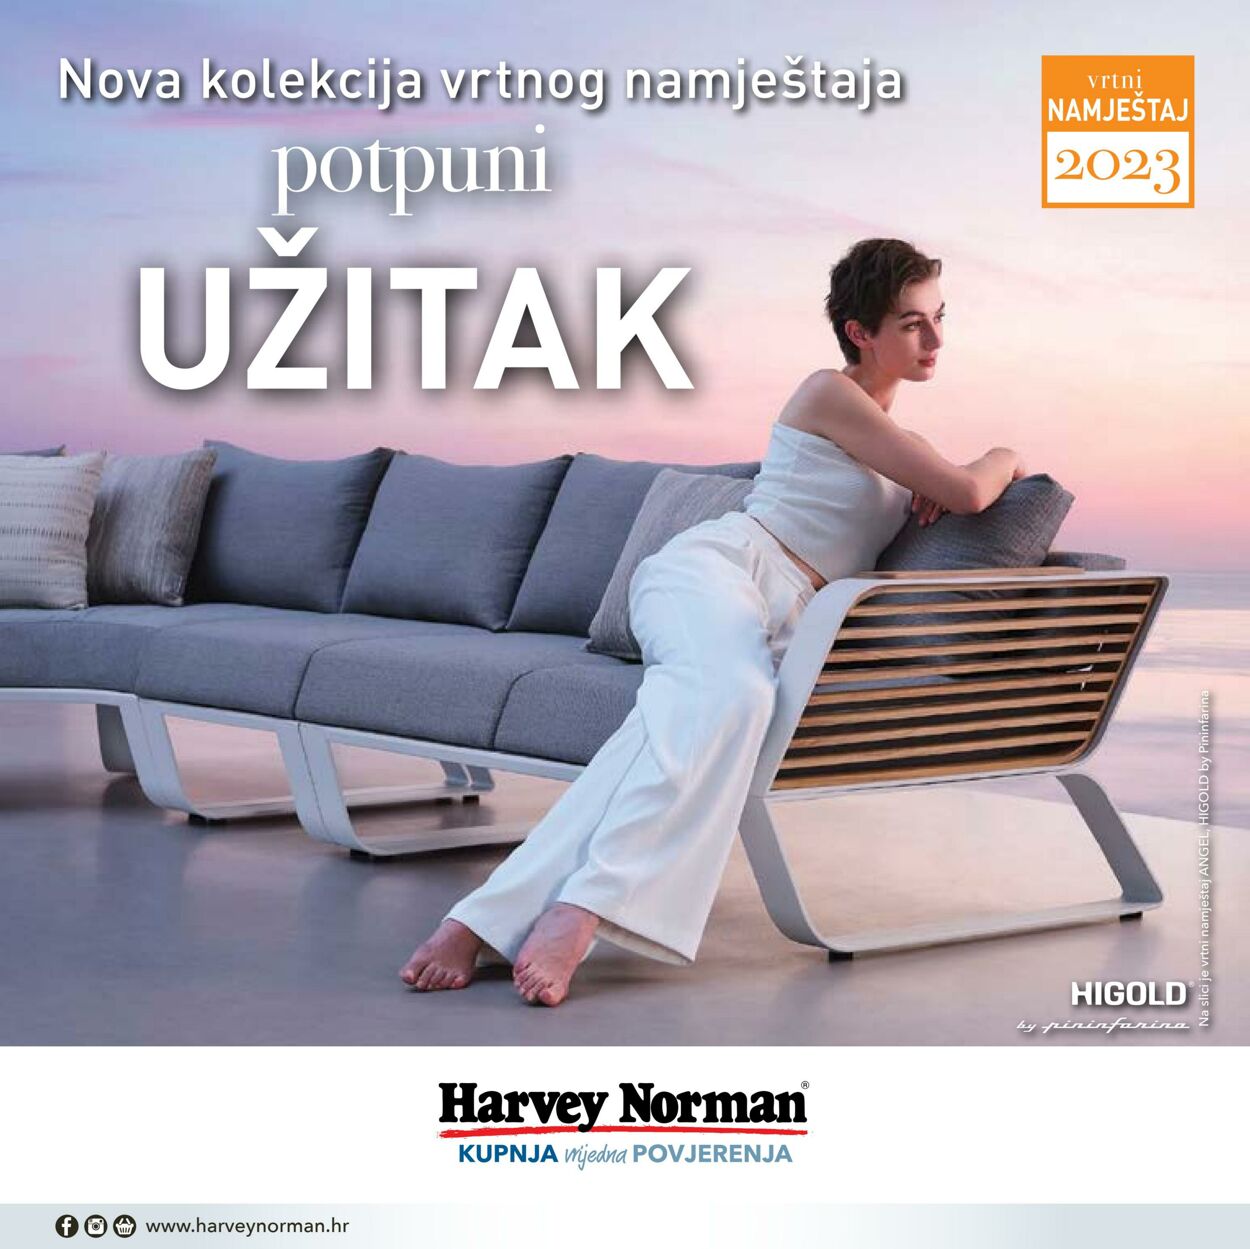 Katalog Harvey Norman - Harvey Norman 1 lip., 2023 - 30 ruj., 2023